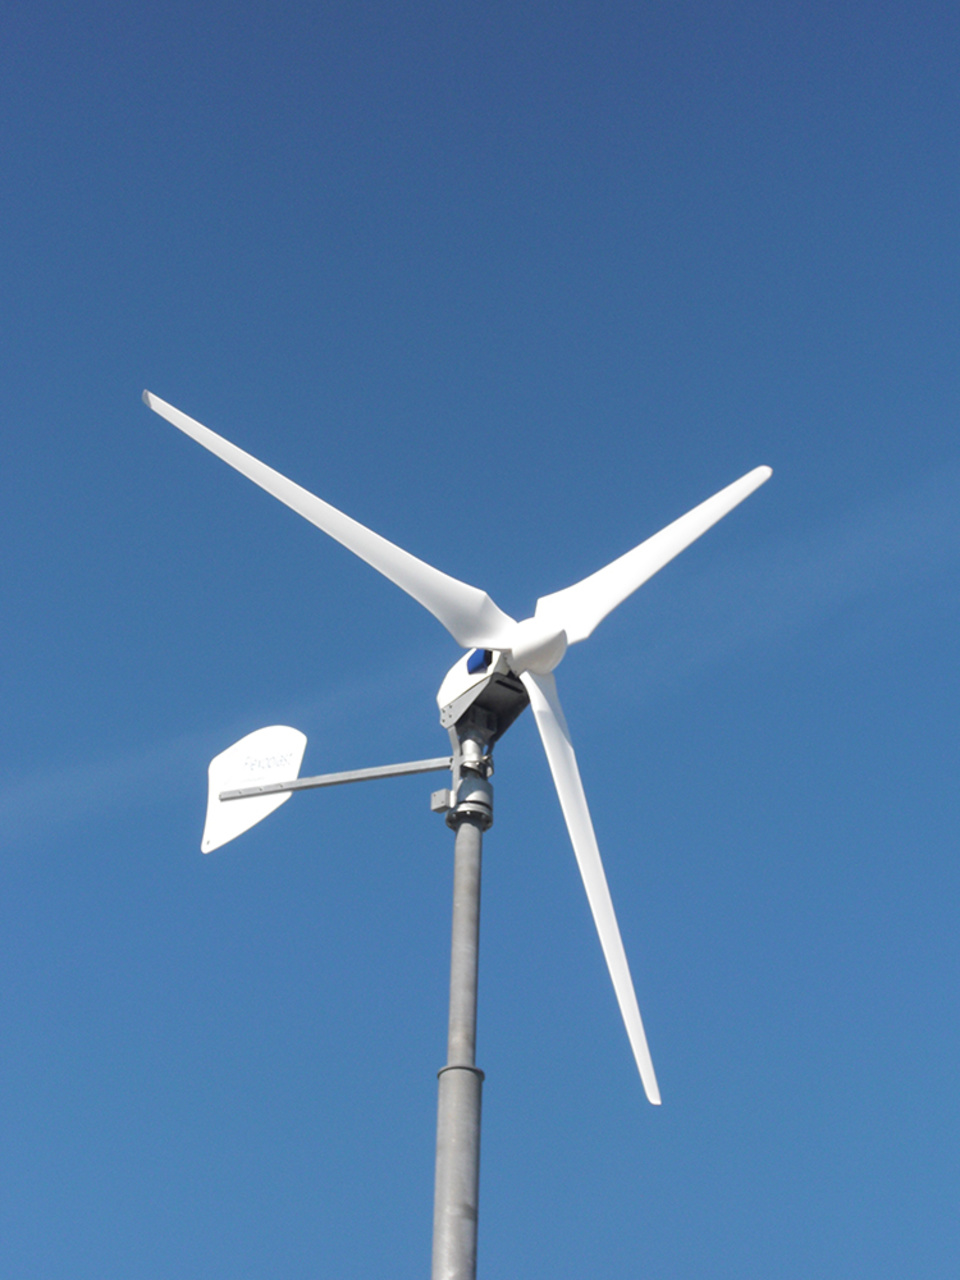 Windkraft2 bei EHS-Elektrotechnik in Schwaig